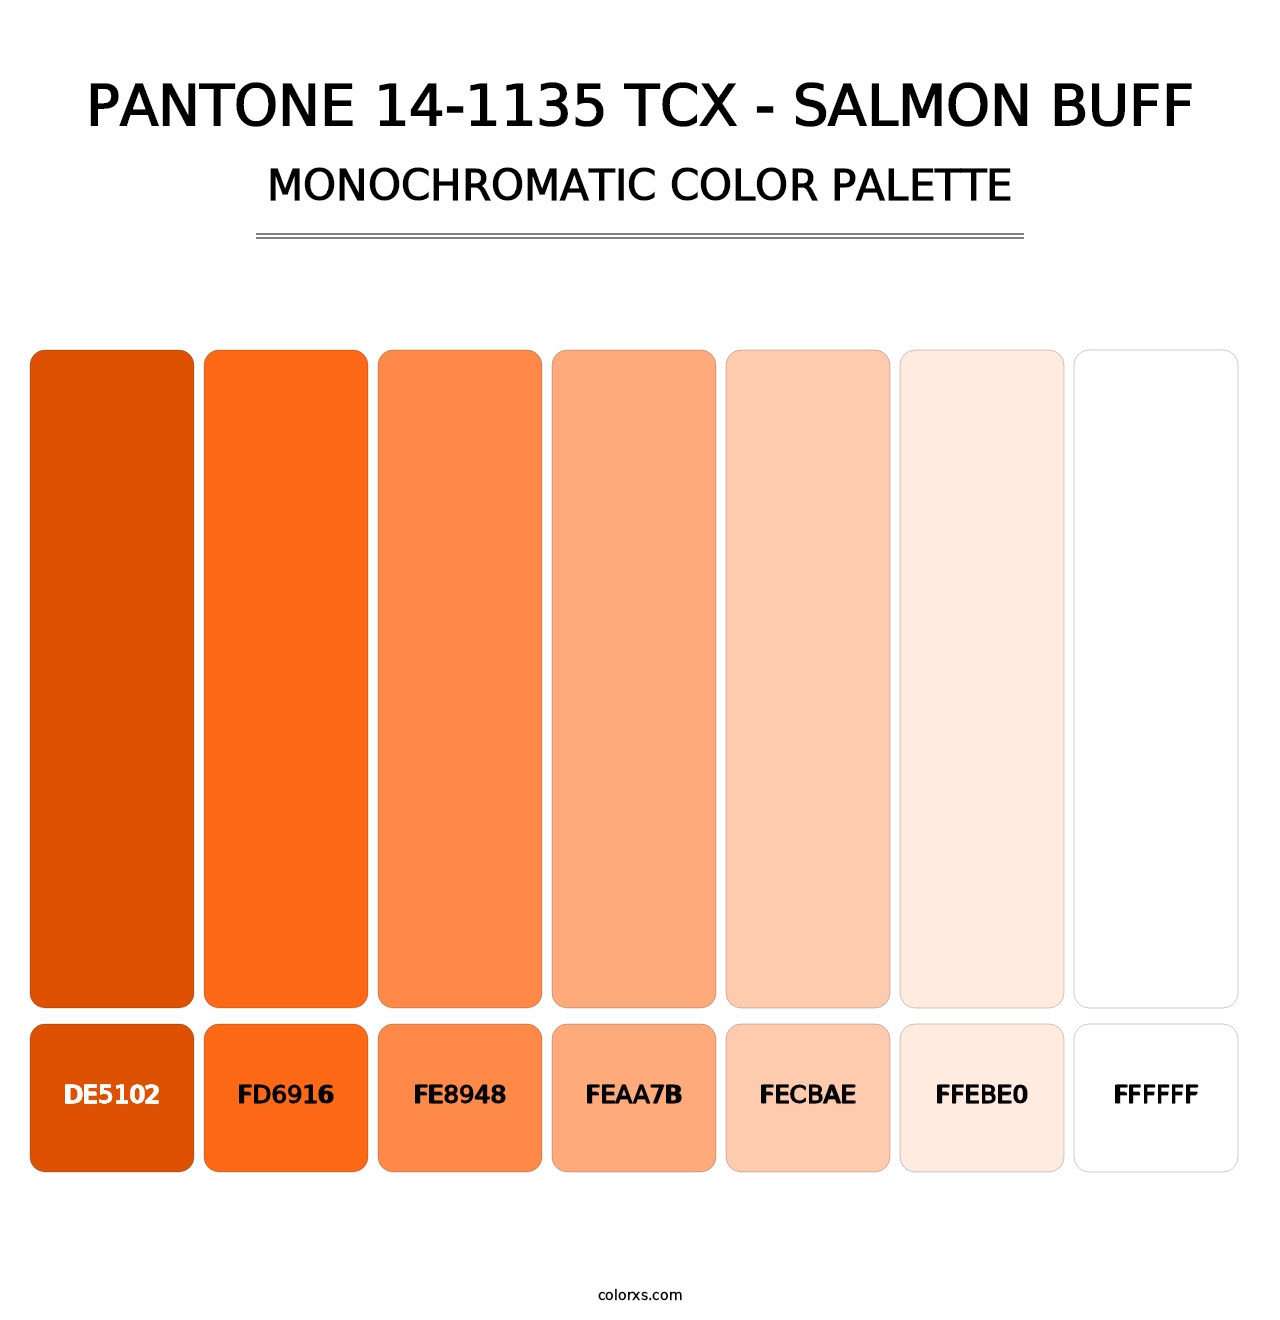 PANTONE 14-1135 TCX - Salmon Buff - Monochromatic Color Palette